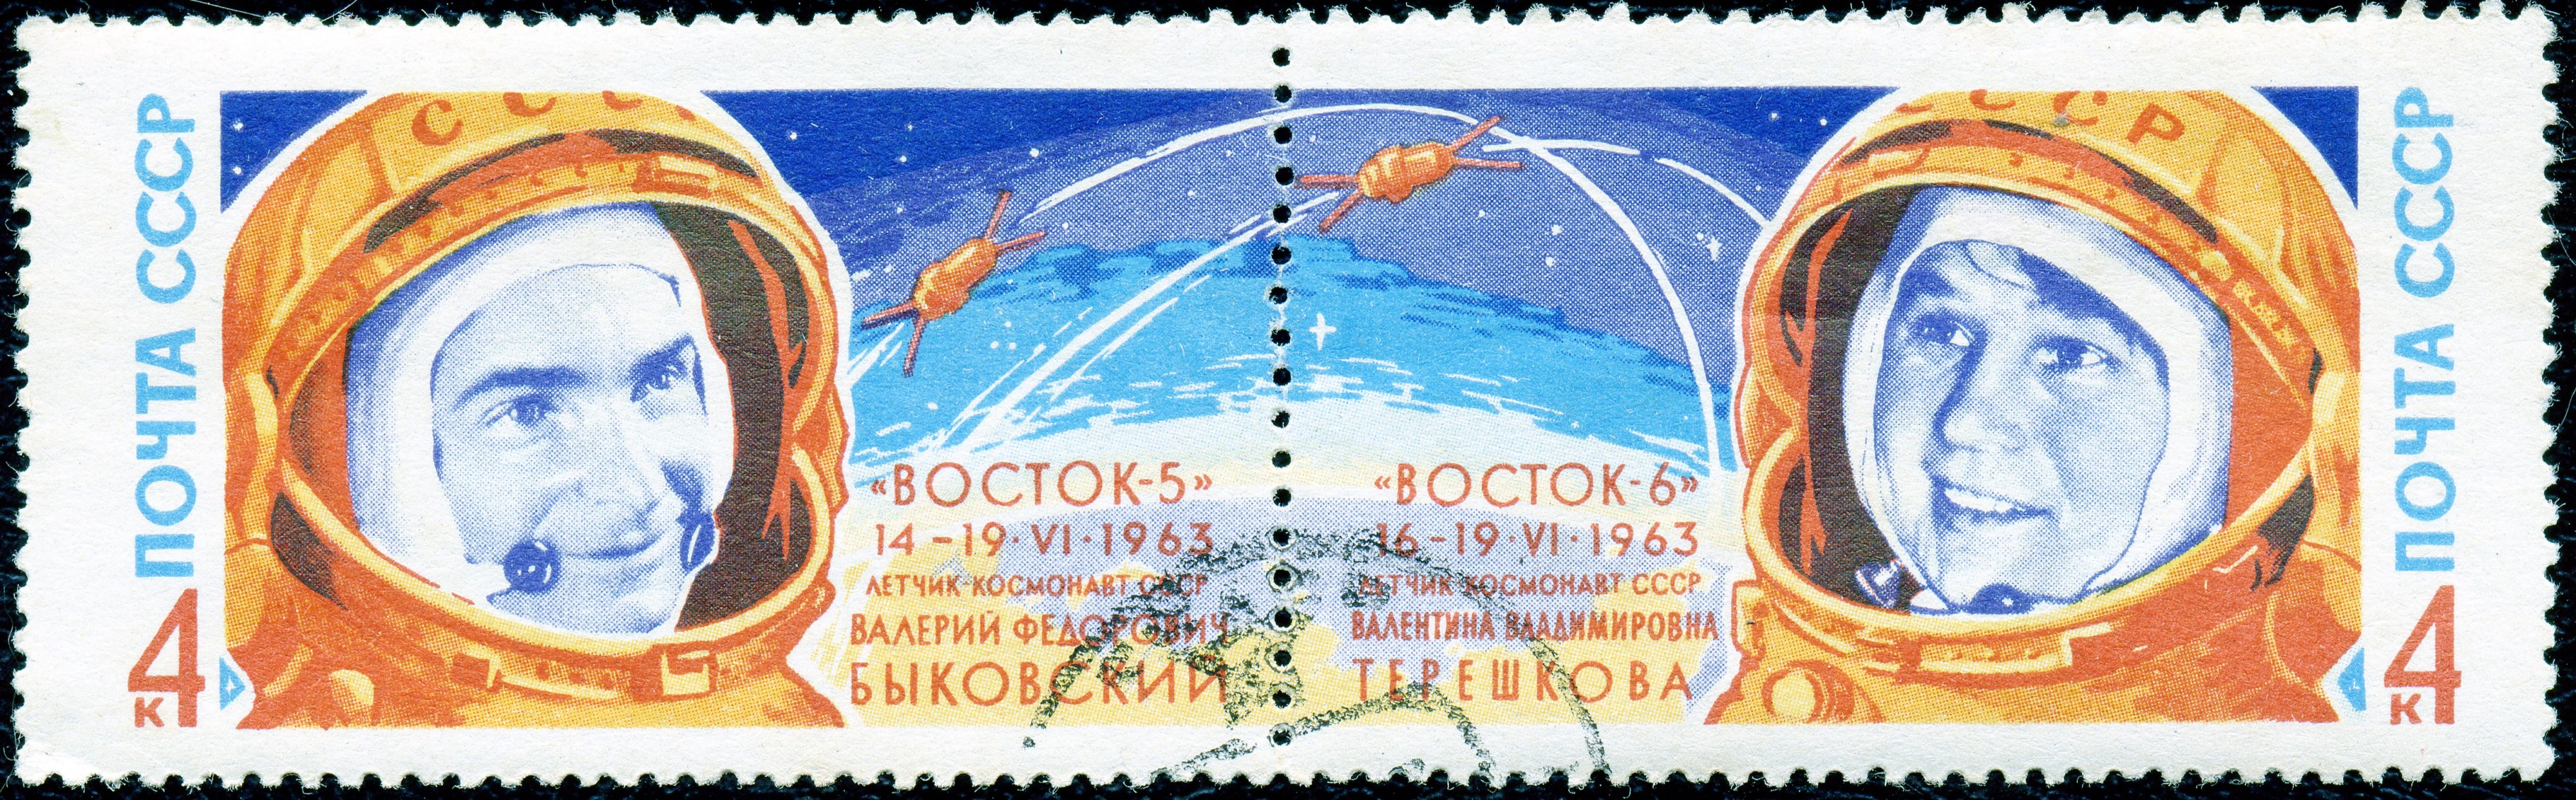 1963. Быковский, Терешкова